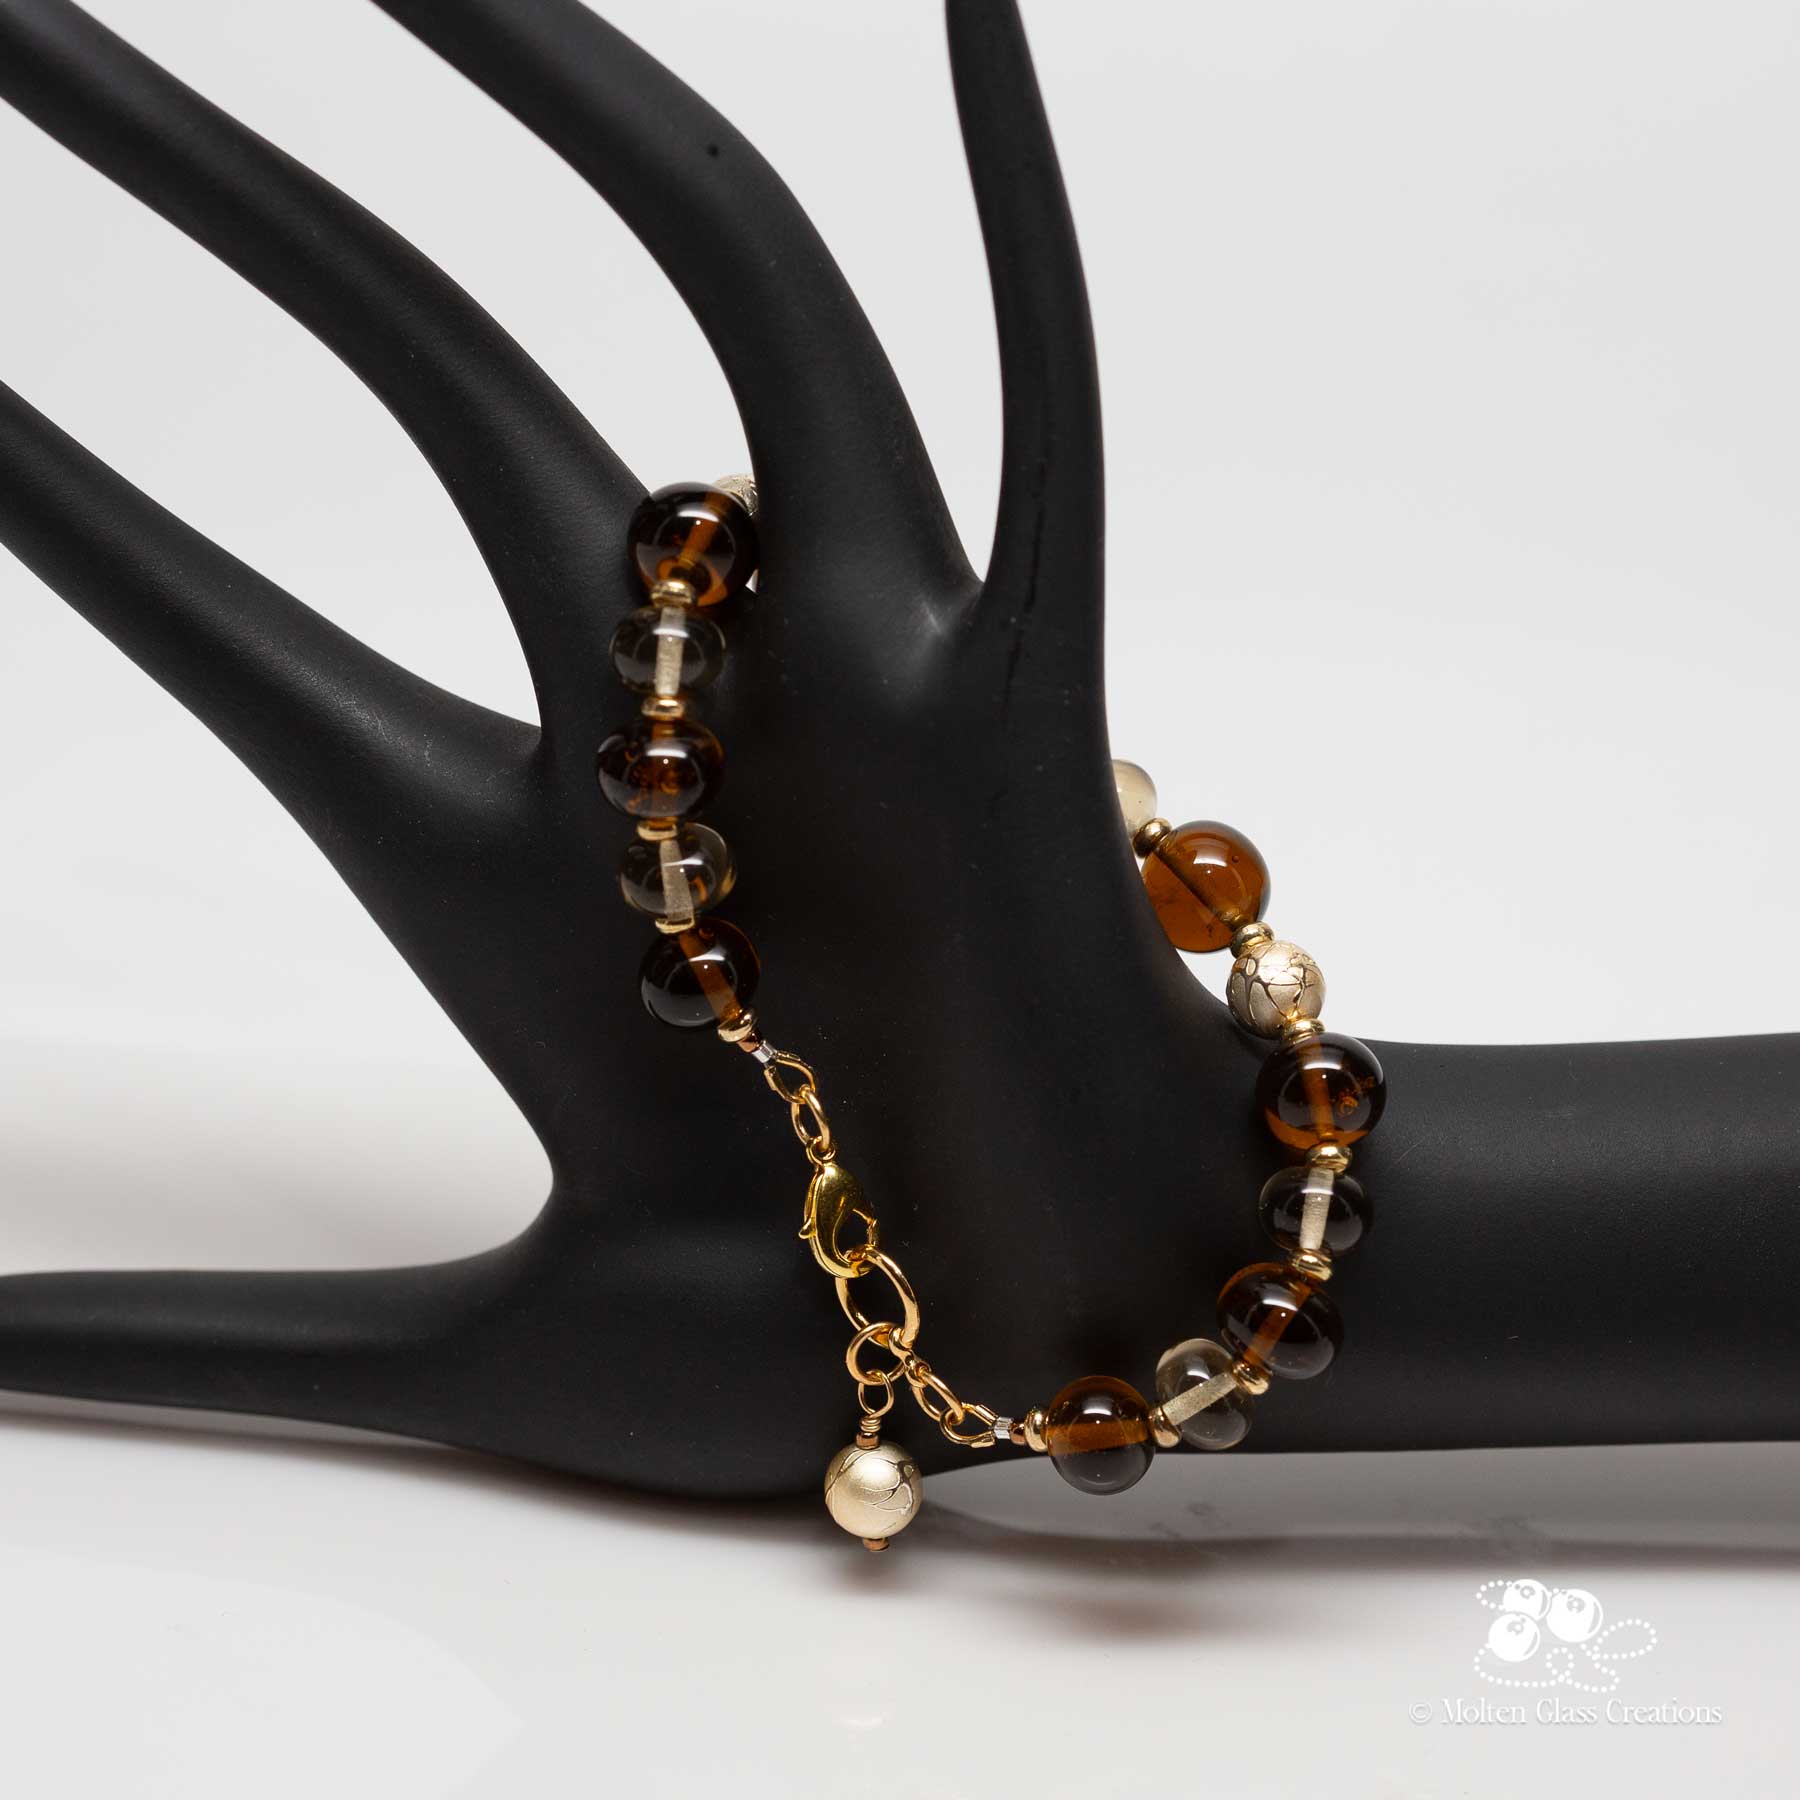 bracelet with combination of light & dark brown beads